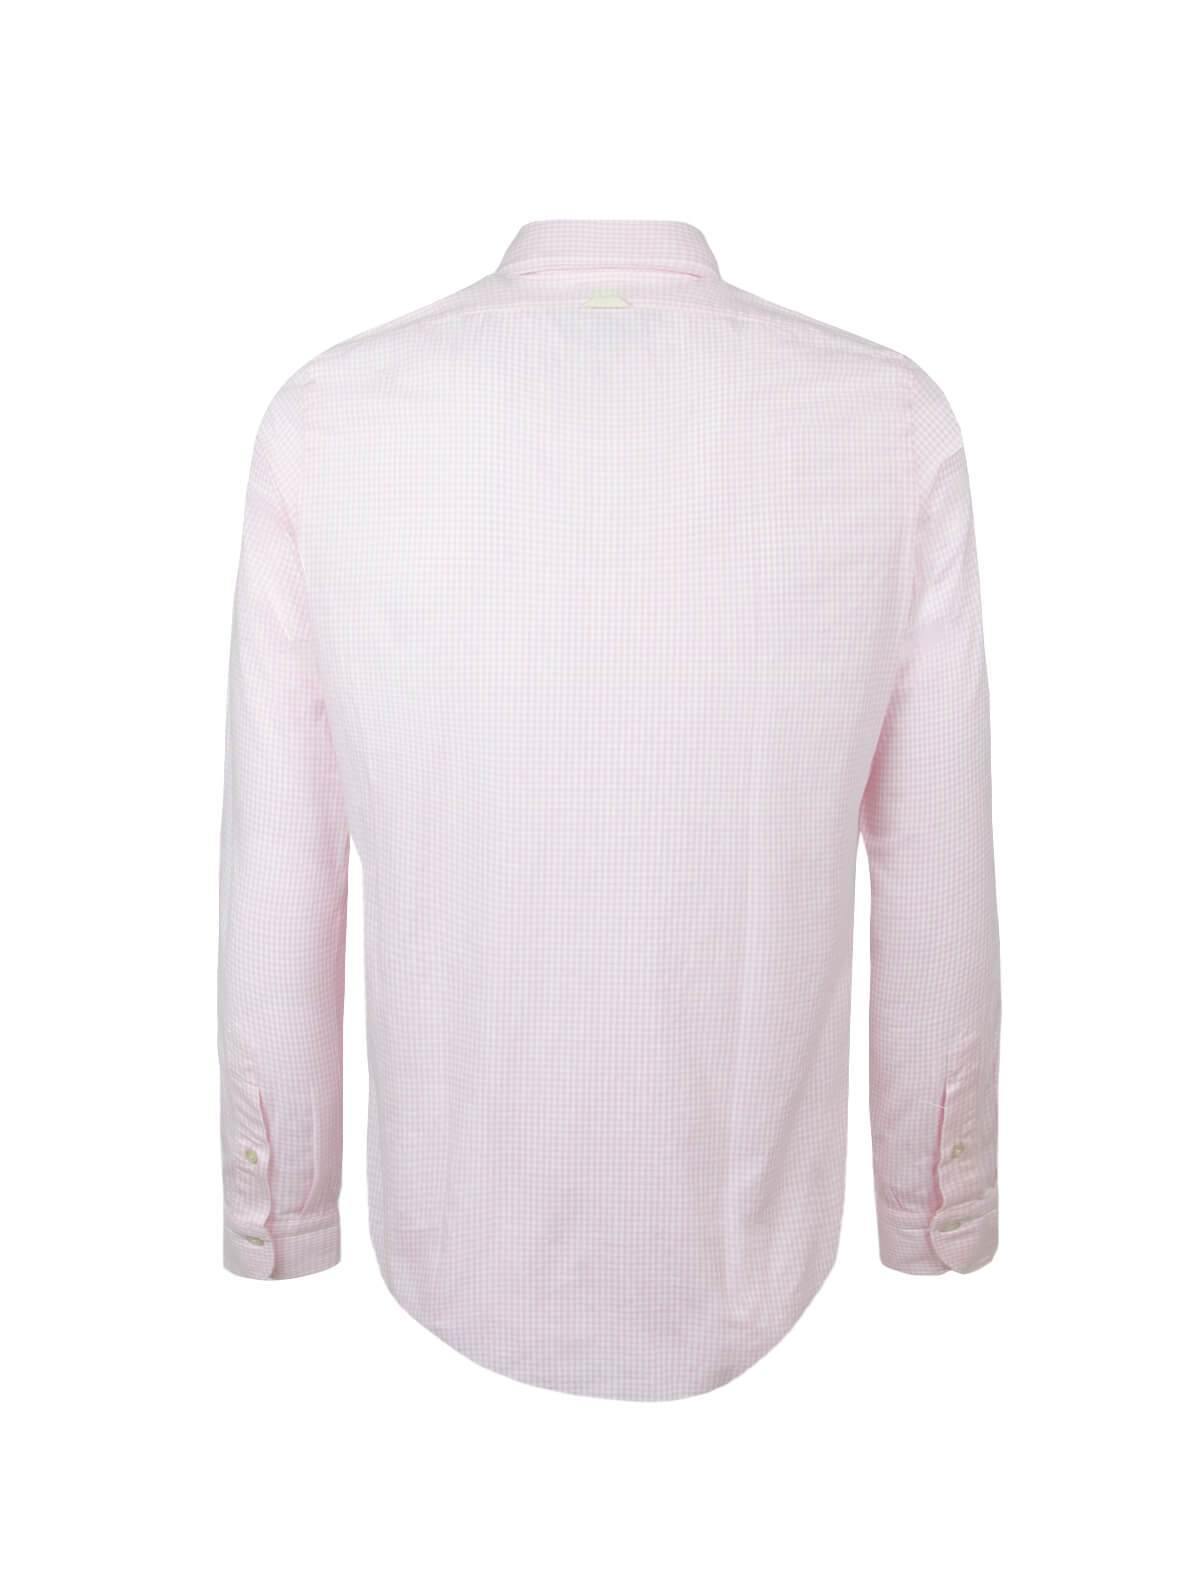 FINAMORE 1925 Tokyo Cotton Chambray Shirt in Light Pink Checks | CLOSET Singapore